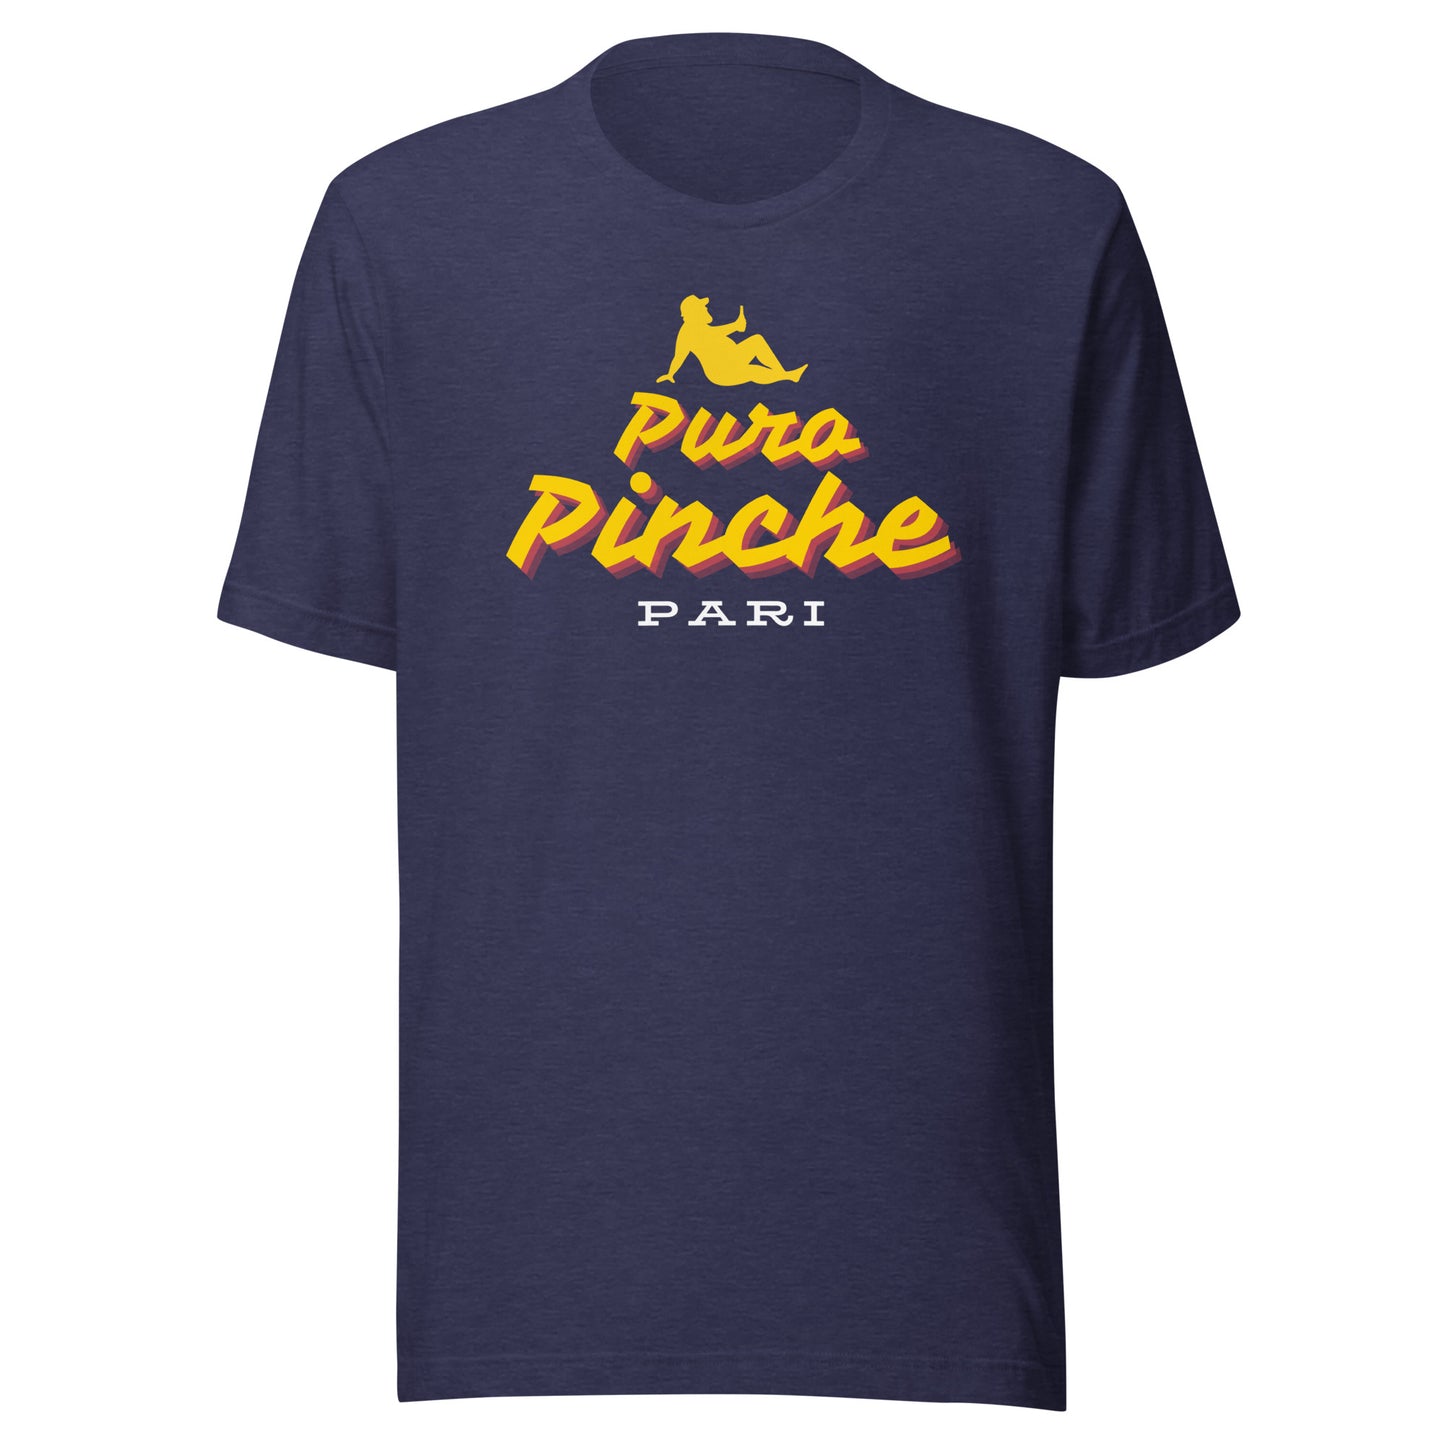 Puro Pinche Pari - Unisex T-shirt